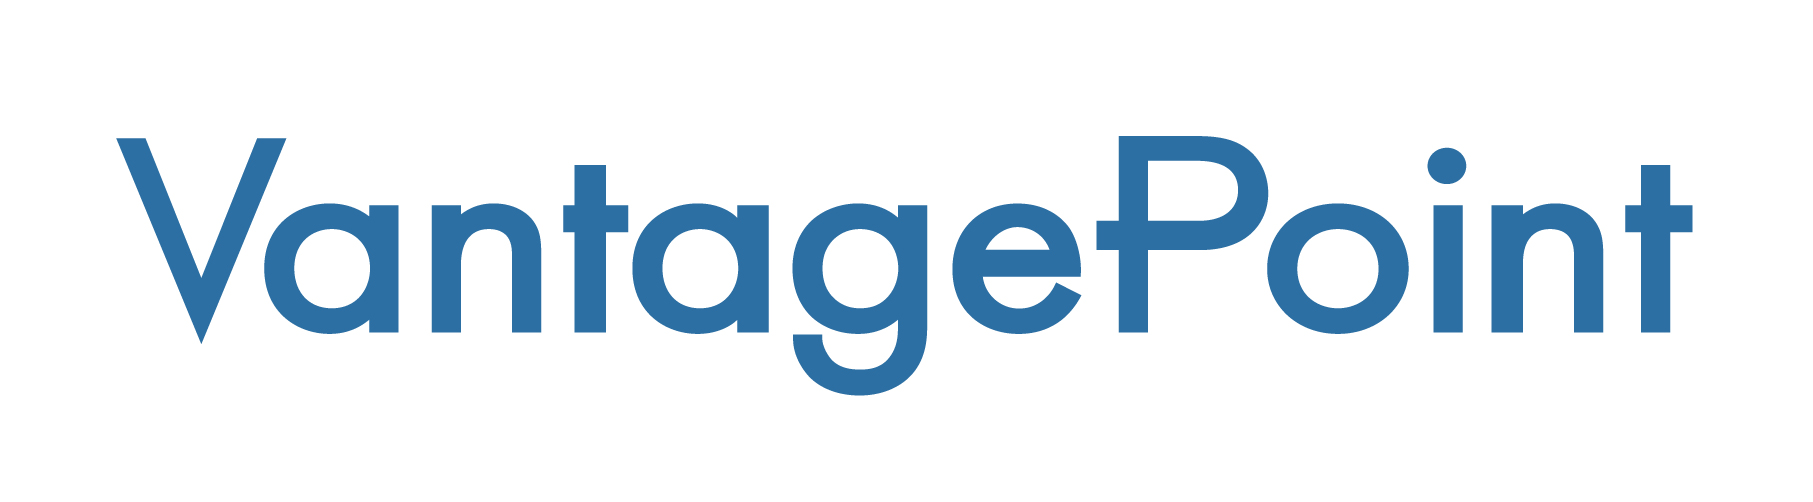 VantagePoint Logo.jpg